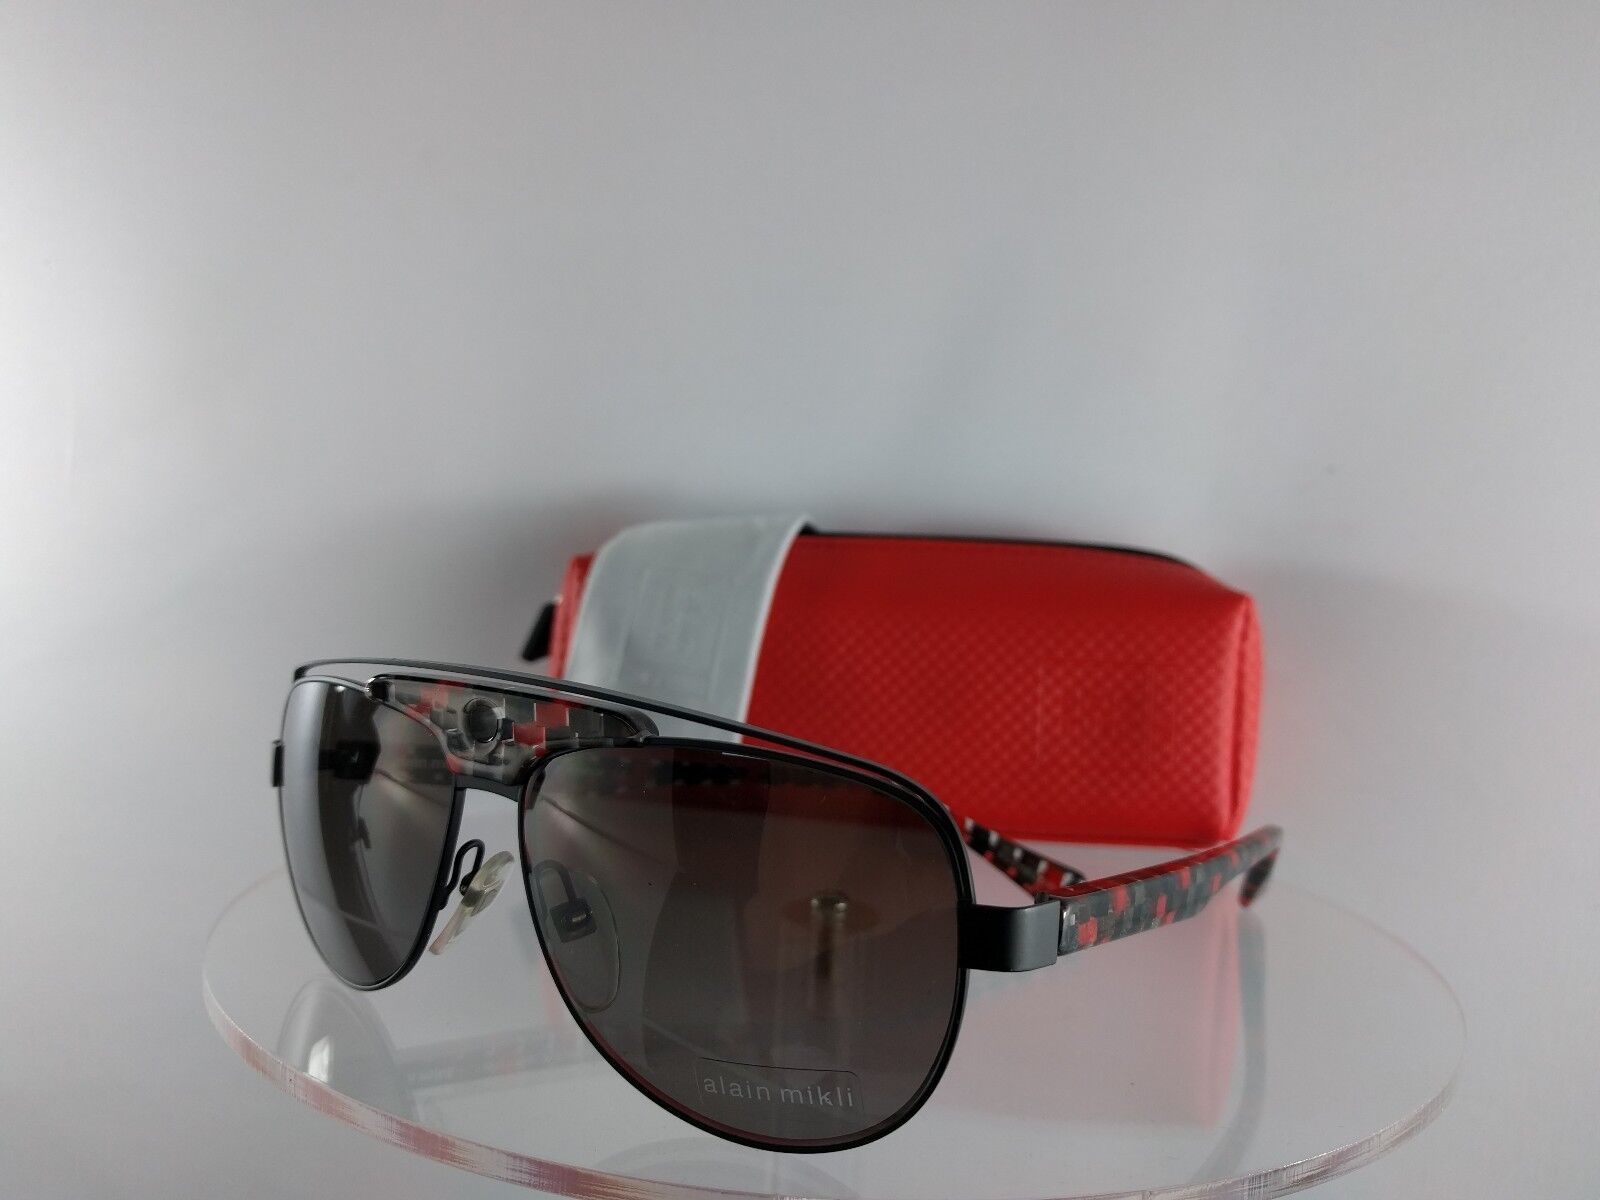 Brand New Authentic Alain Mikli Sunglasses AL1206 MO83 1206 cat 03 Black Red